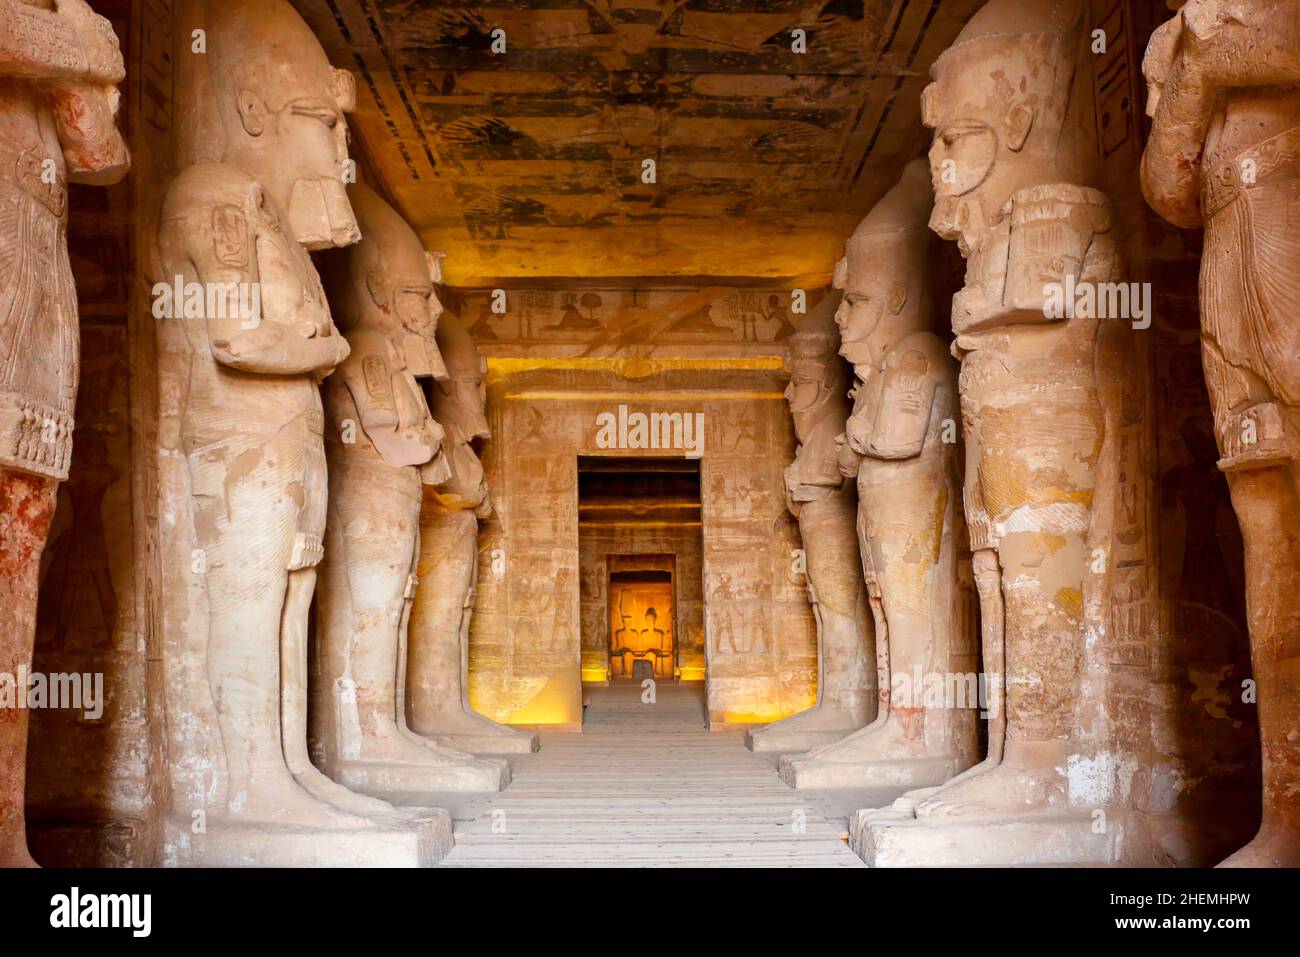 Abu Simbel, Egitto - all'interno del grande tempio di Ramses II ad Abu Simbel. Foto Stock